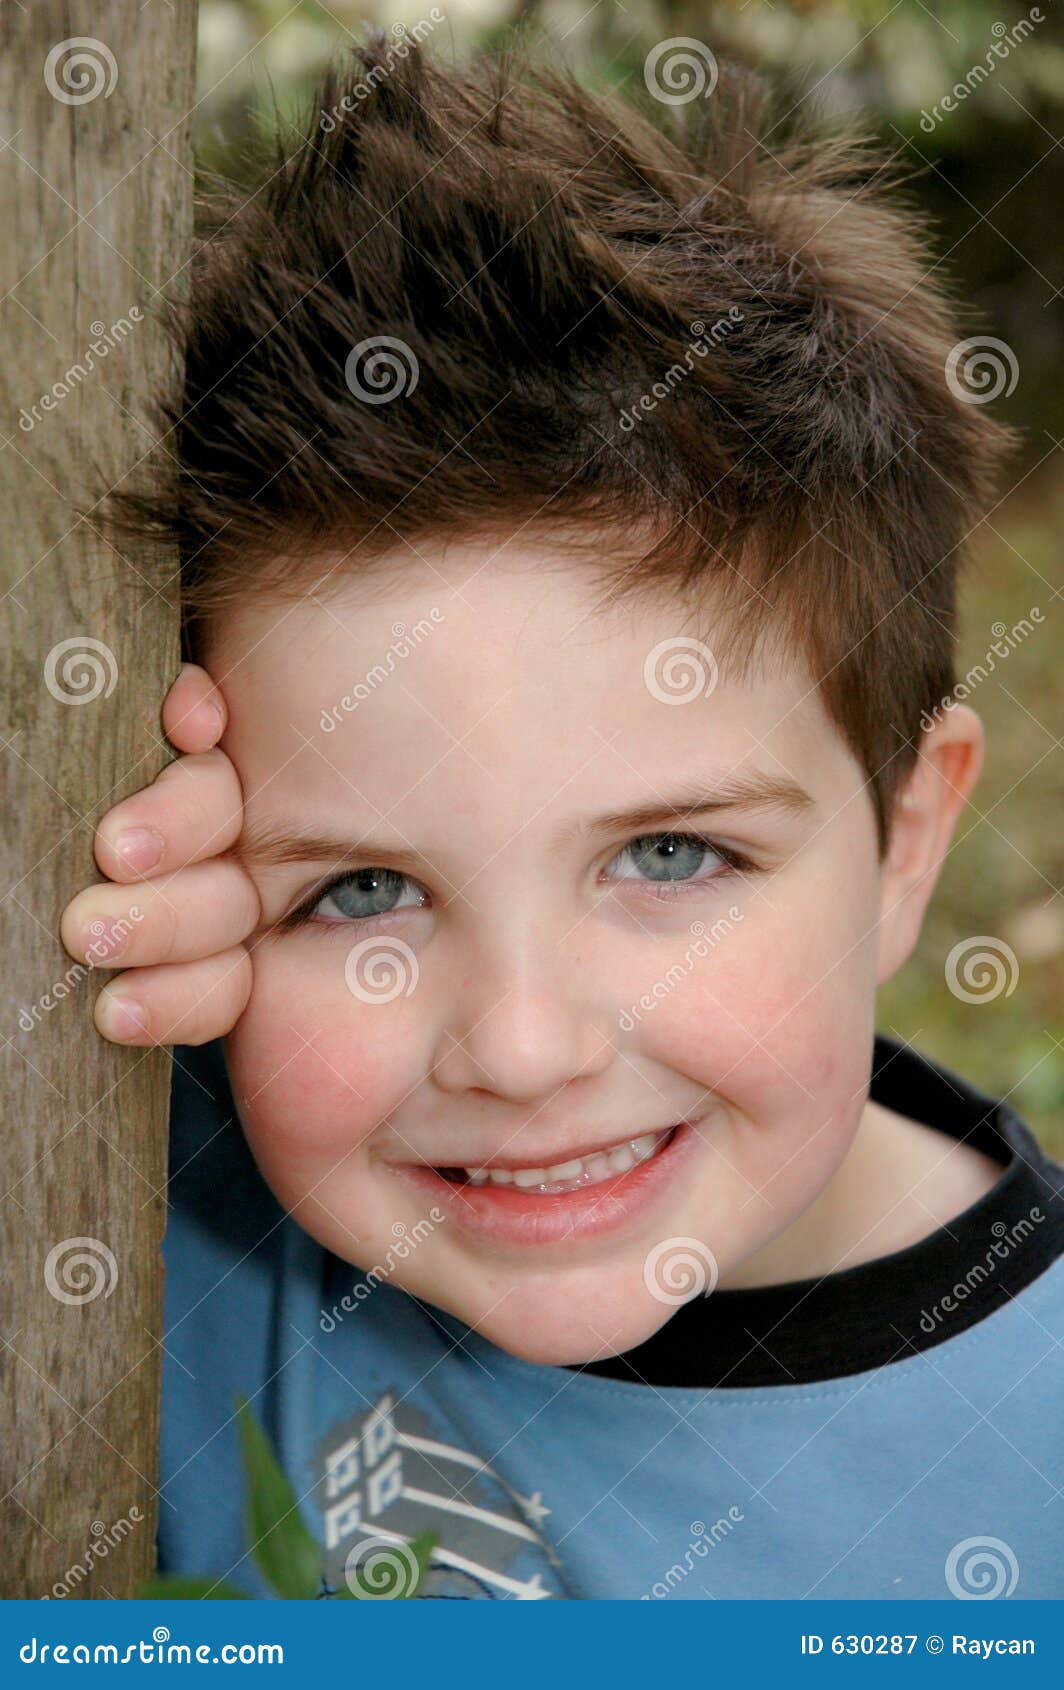  Beautiful  Little Boy  stock image Image of fresh explore 